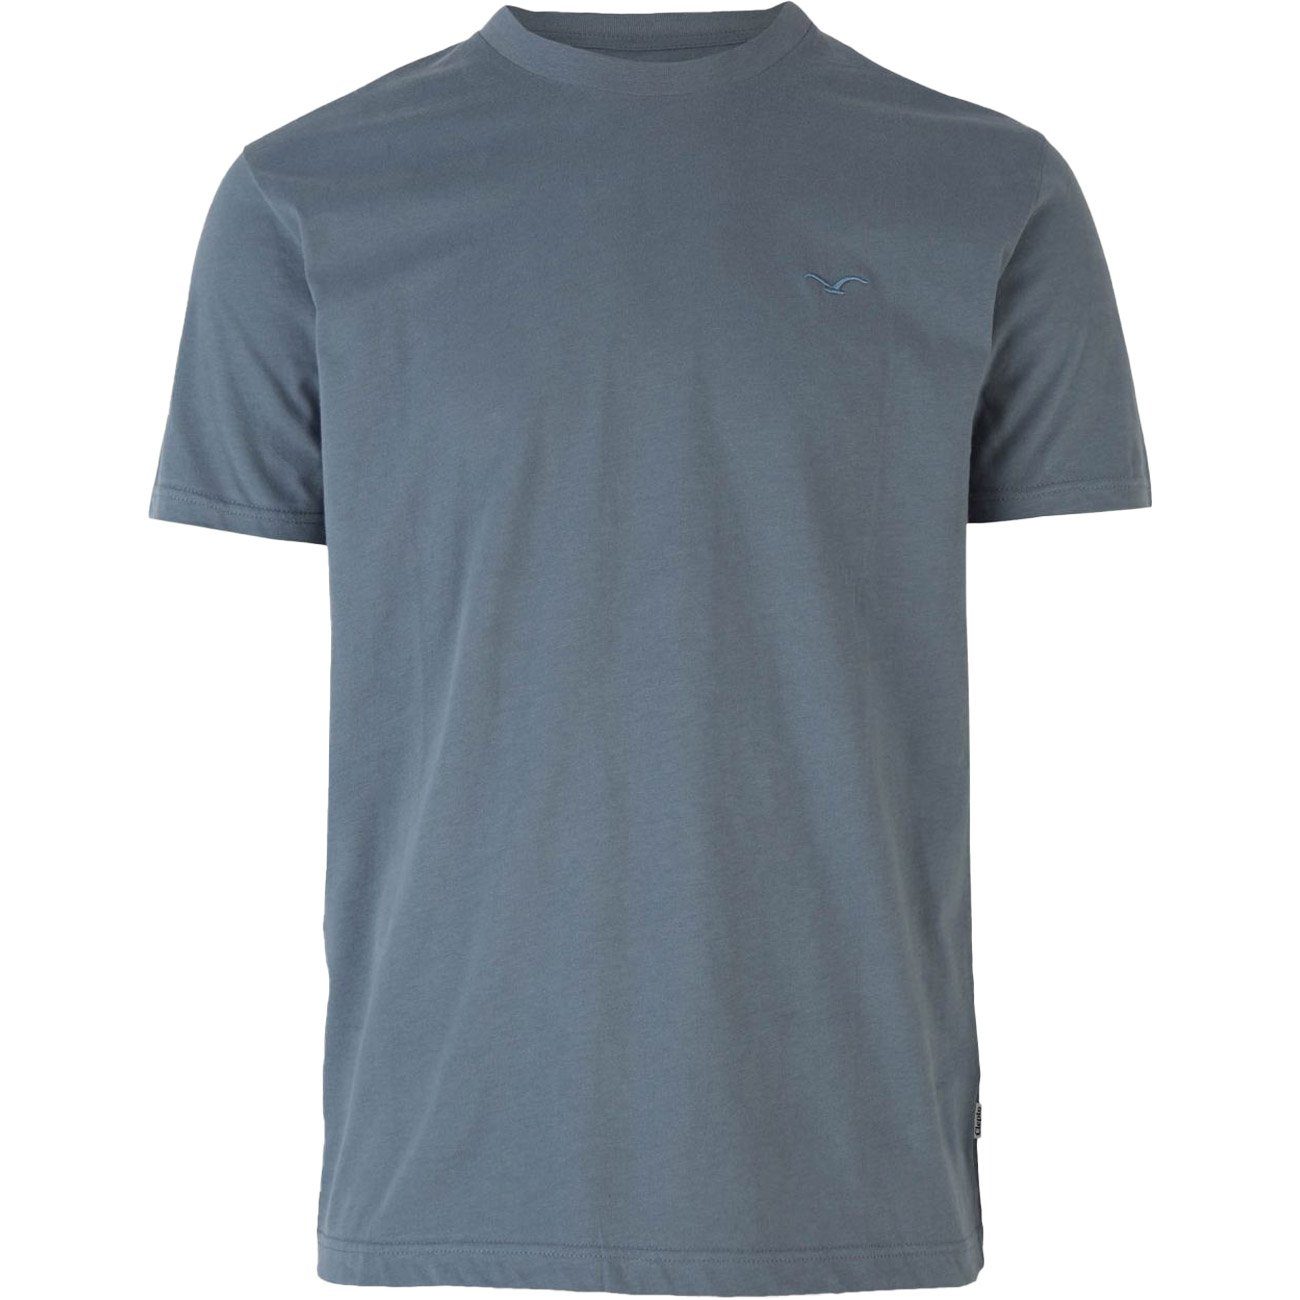 Top-Management-Position T-Shirt Cleptomanicx Regular graphite Ligull blue